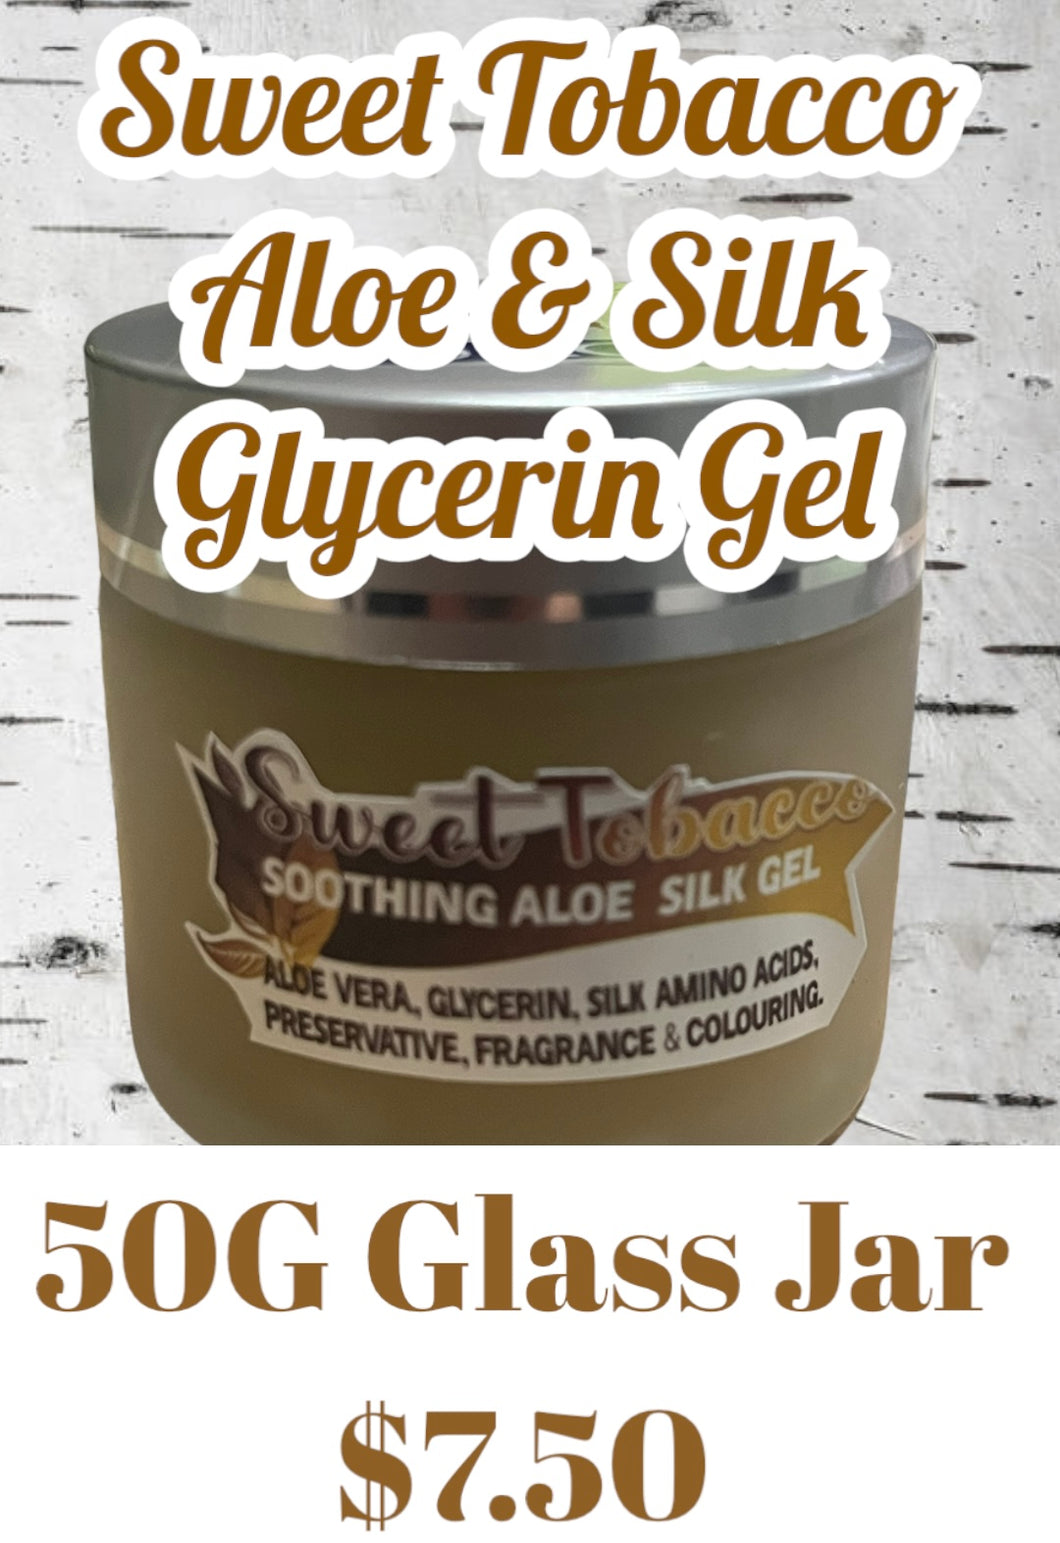 30 G Glass Jar Sweet Tobacco Soothing Aloe, Silk & Glycerin Gel Moisturizer